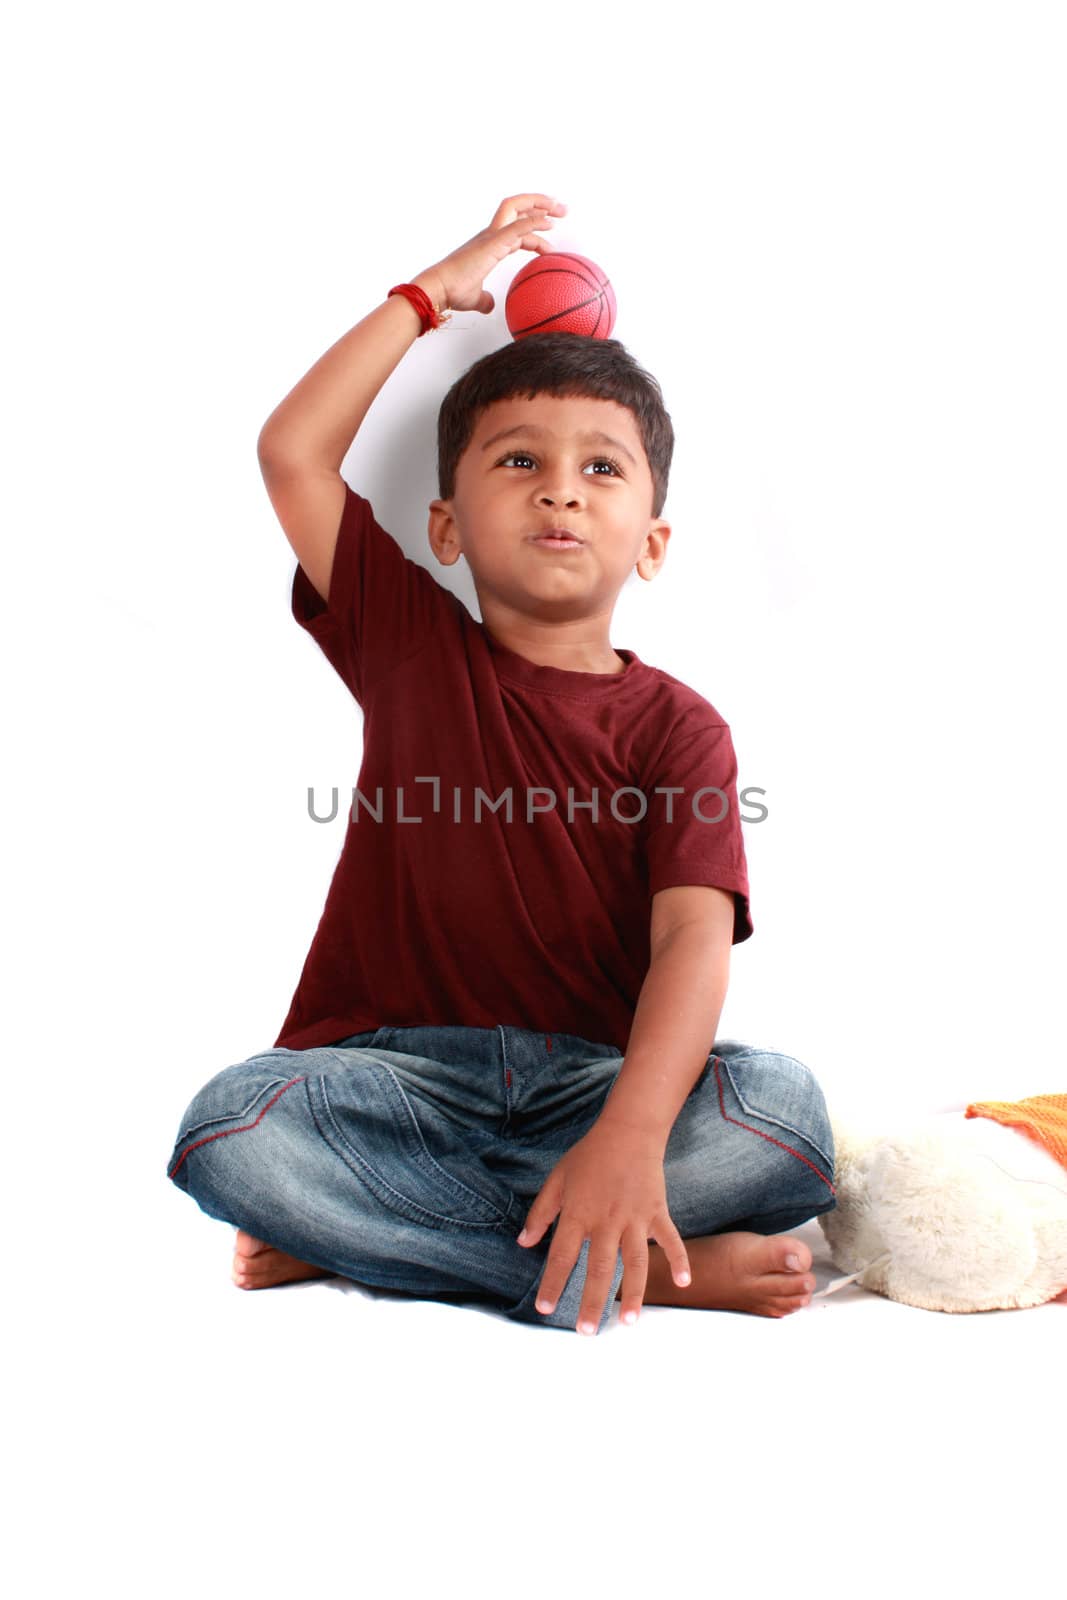 A cute Indian boy in a playful mood.